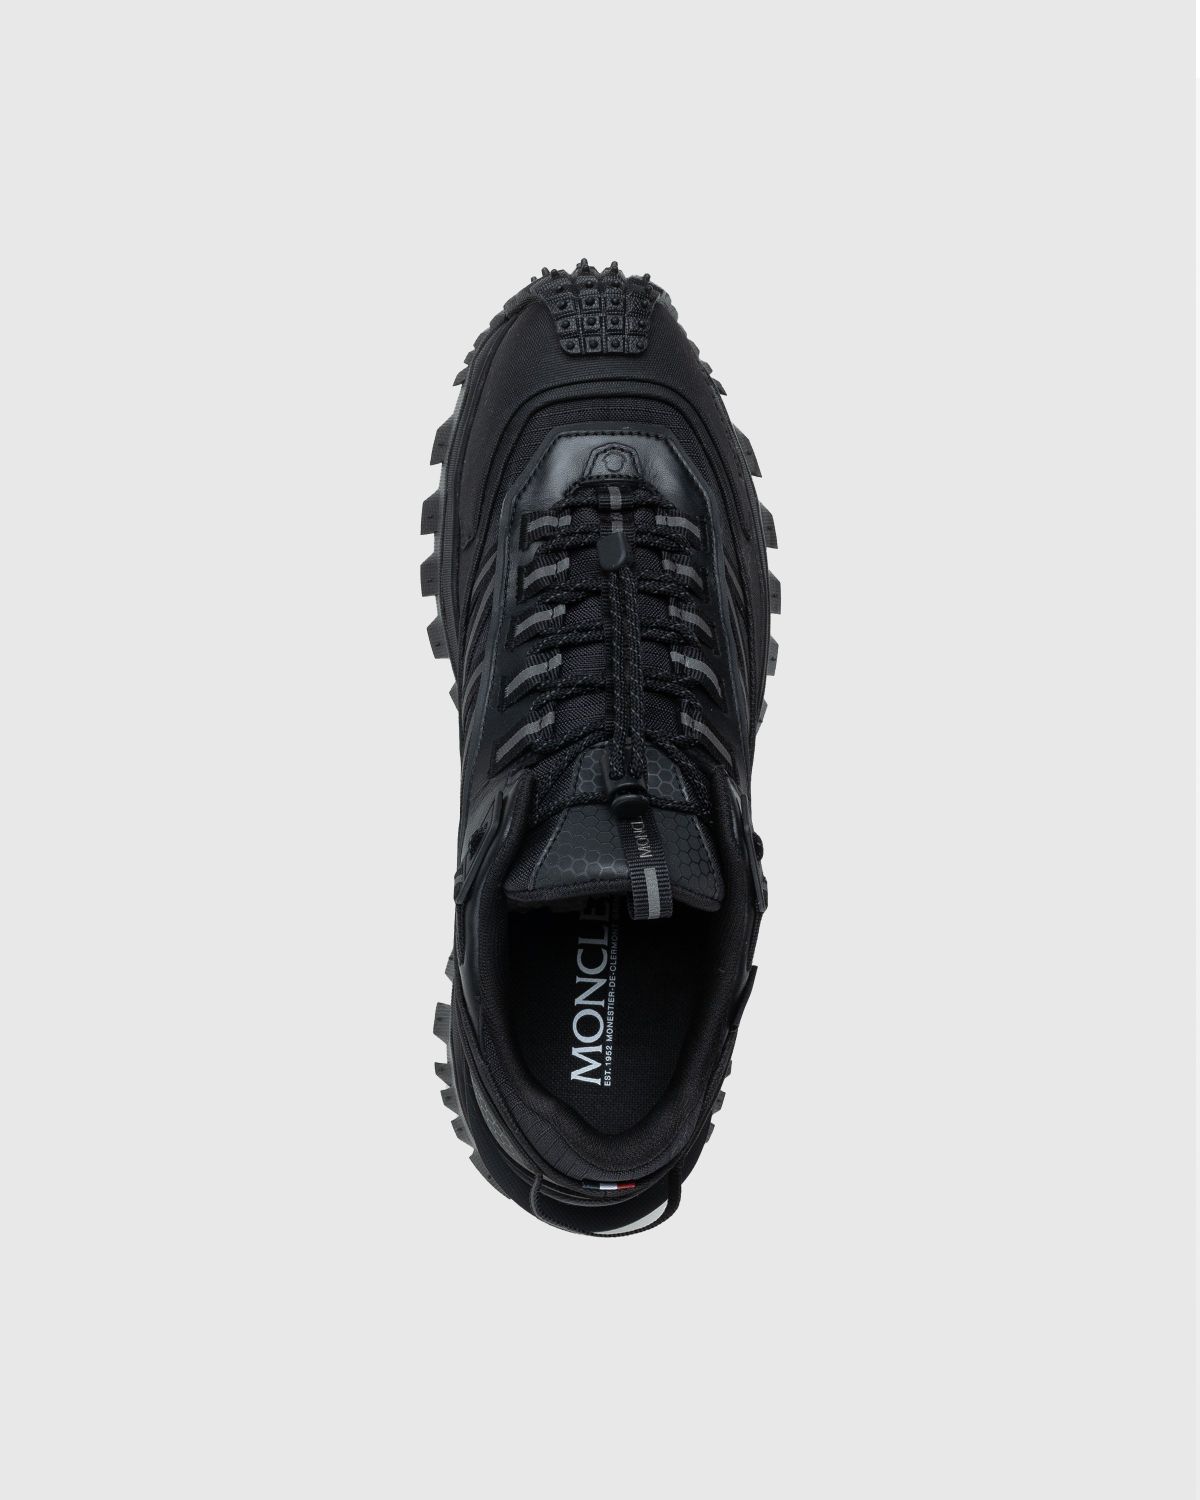 Moncler – Trailgrip Gtx Low Top Sneakers Black | Highsnobiety Shop